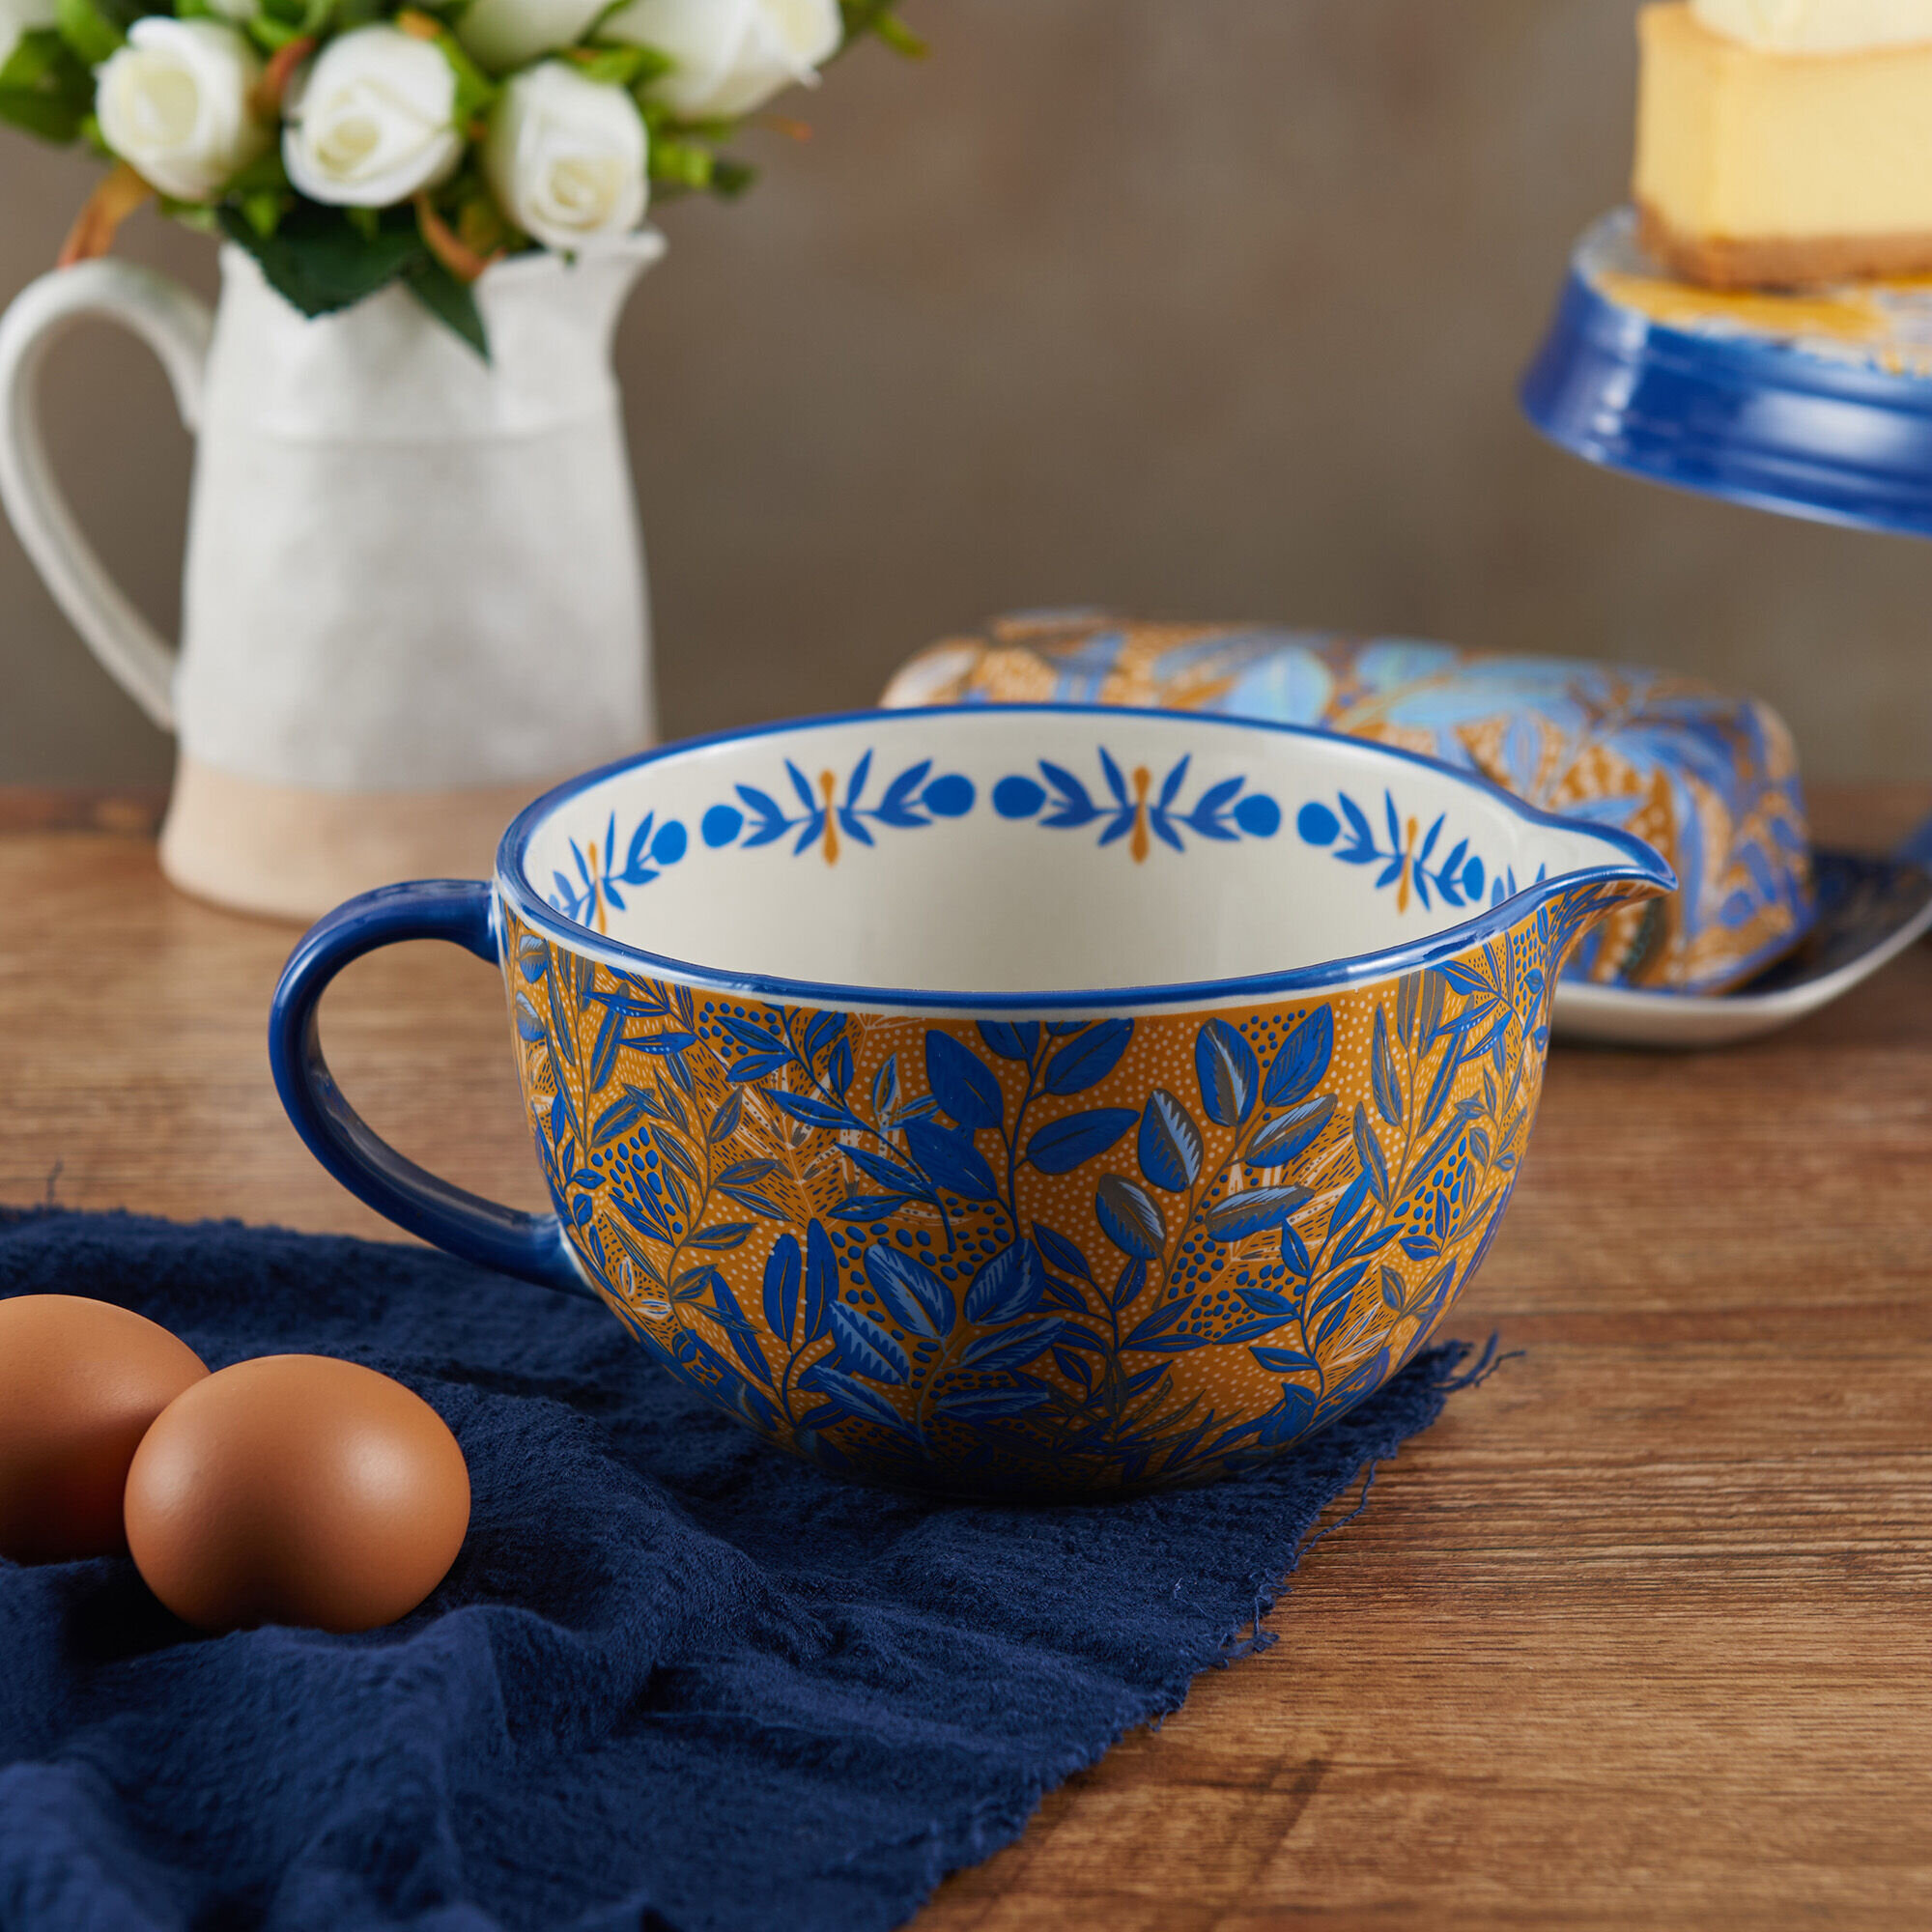 Nested Ceramic Measuring Cups Multi-color Floral Design Gold